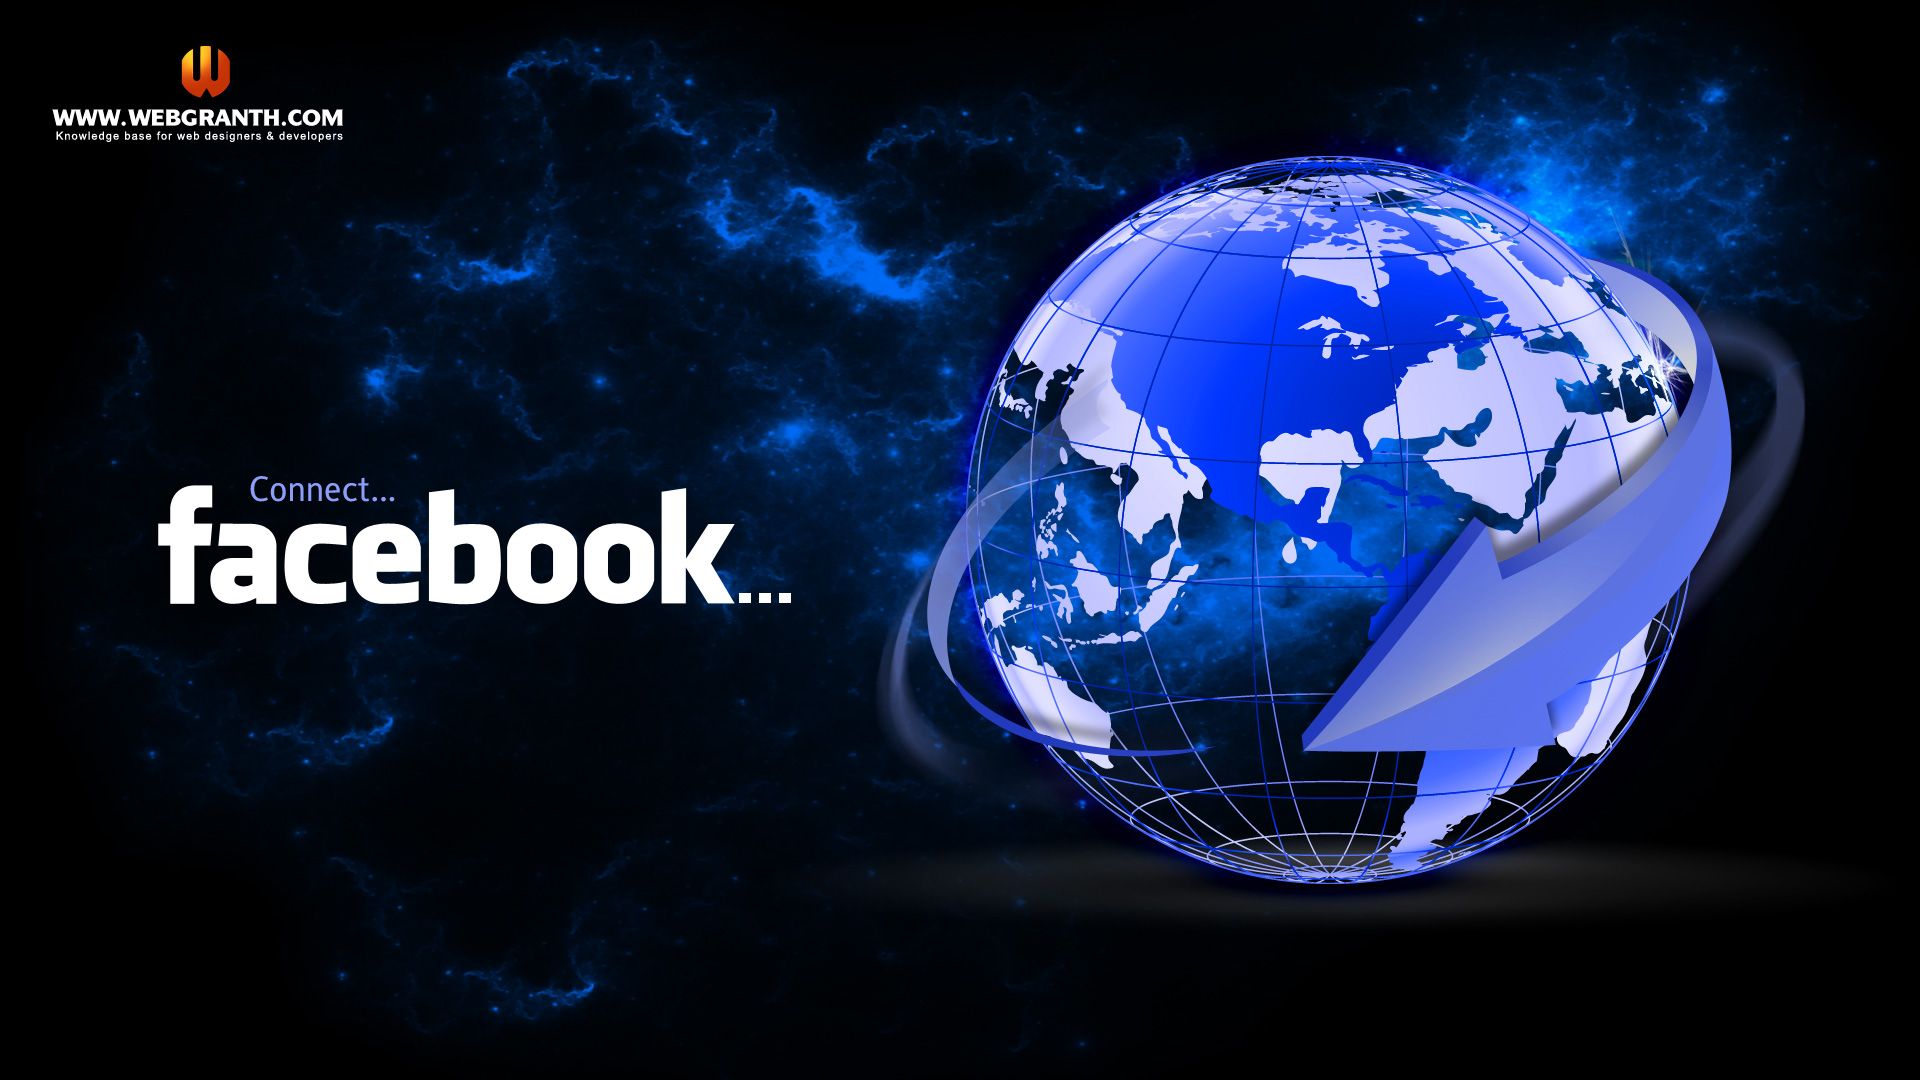 Facebook Wallpapers - Facebook Login Iphone App - HD Wallpaper 